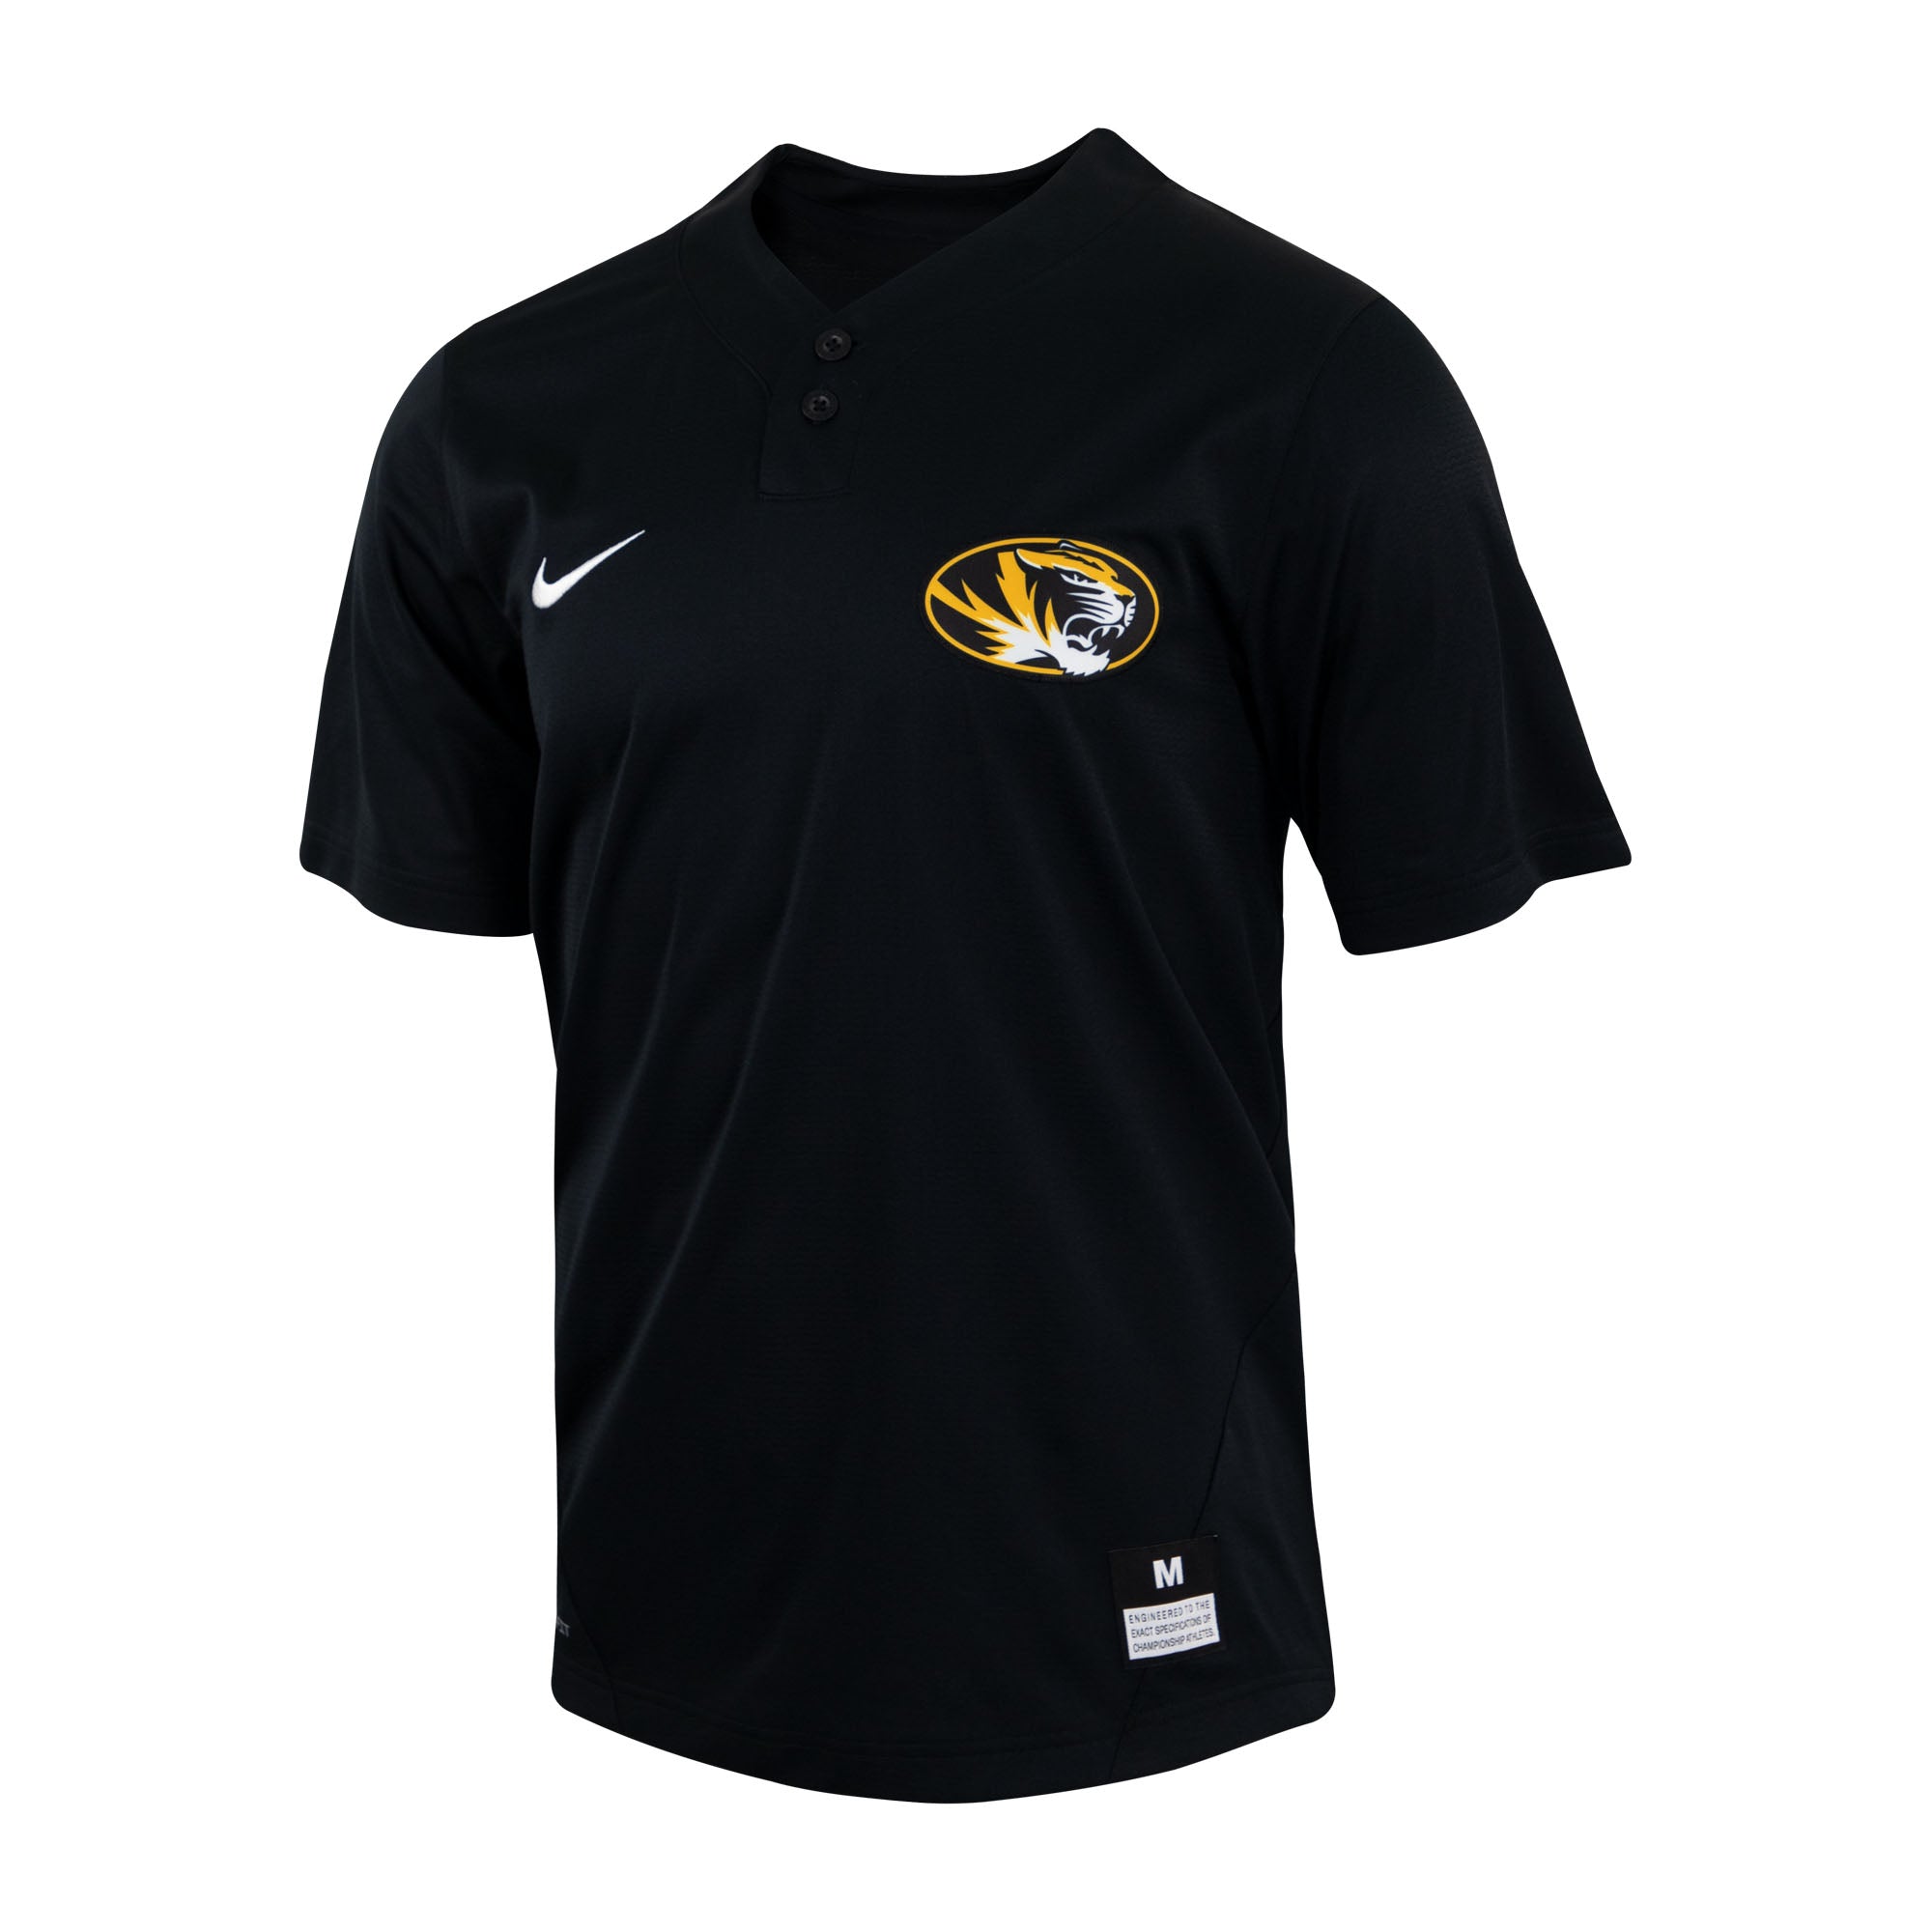 Mizzou Tigers #1 Nike® Replica Black and Gold Basketball Jersey 